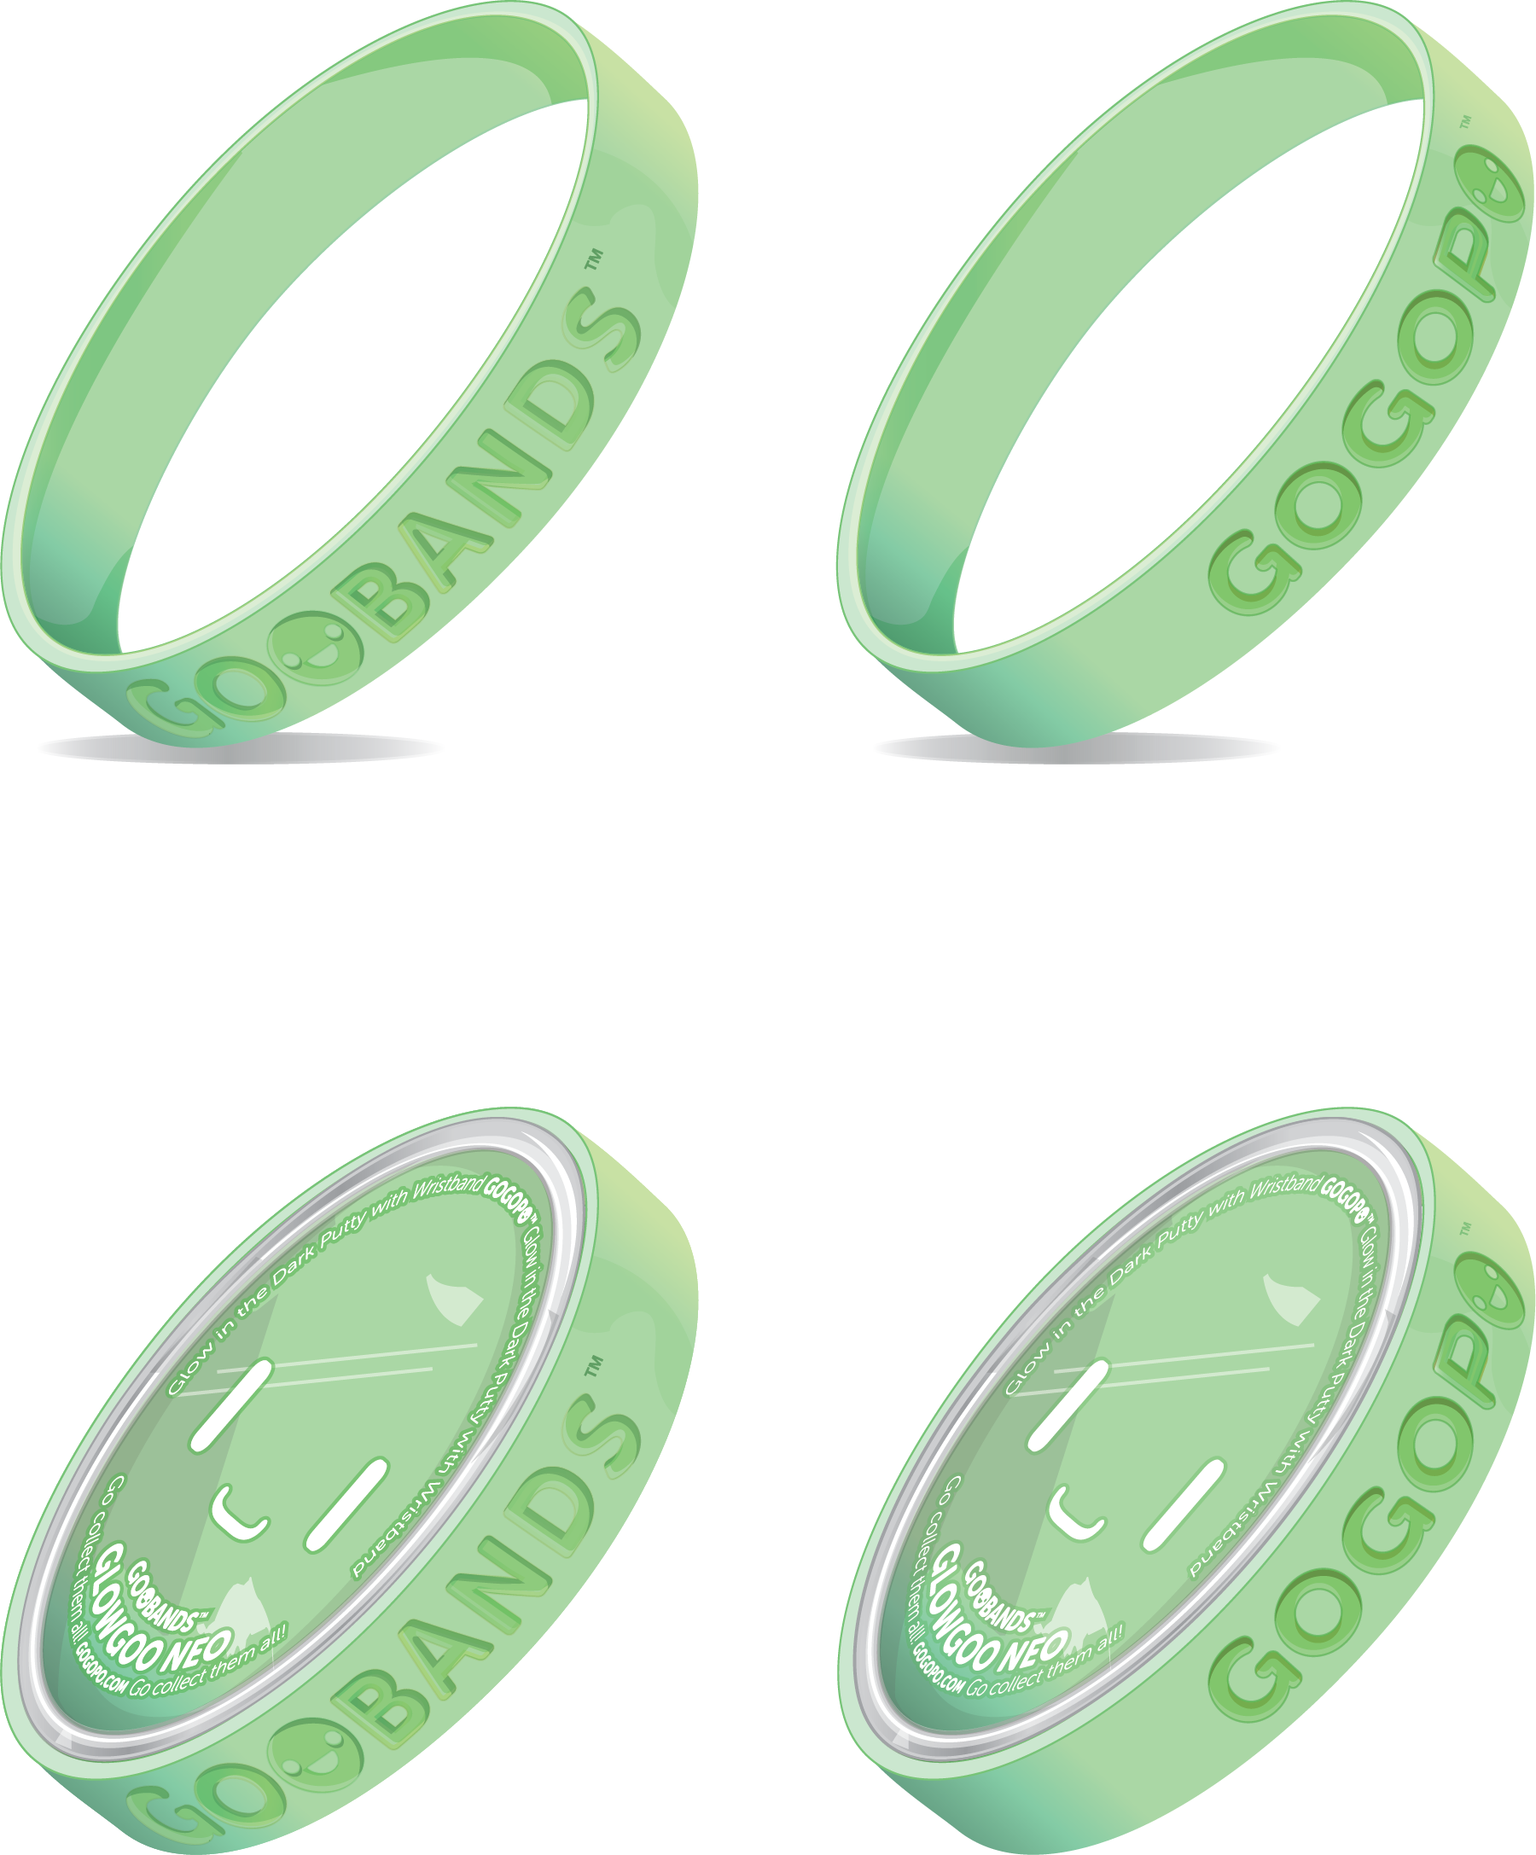 Goobands Glow Goo Slime With Wristband